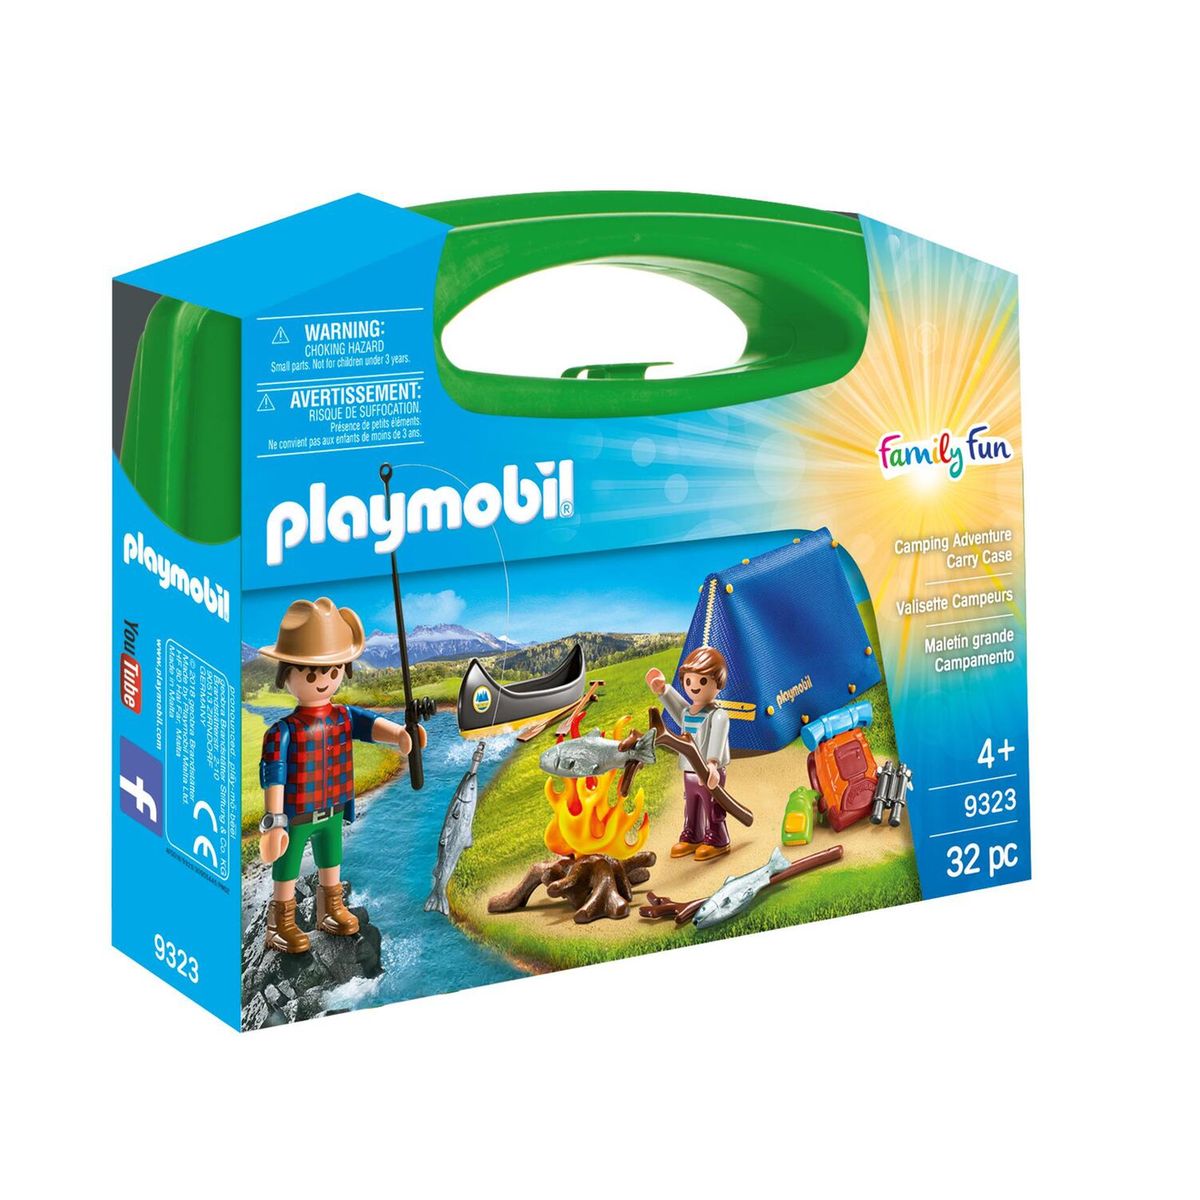 Playmobil 9323 valisette campeurs- - sports et action - family fun